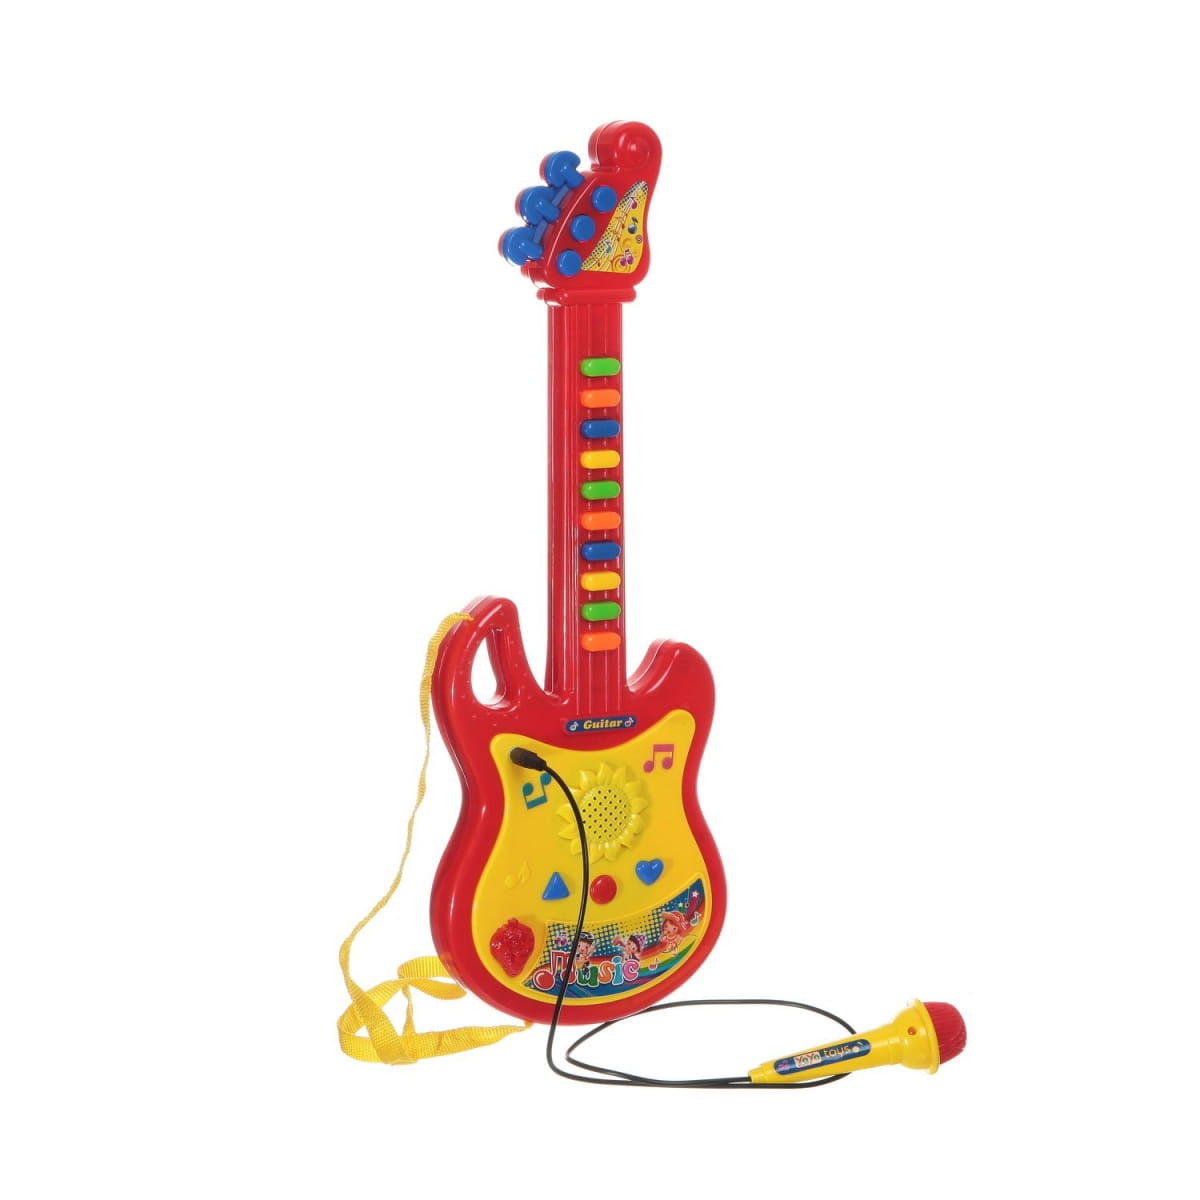      Shenzhen Toys Music Guitar YoYo